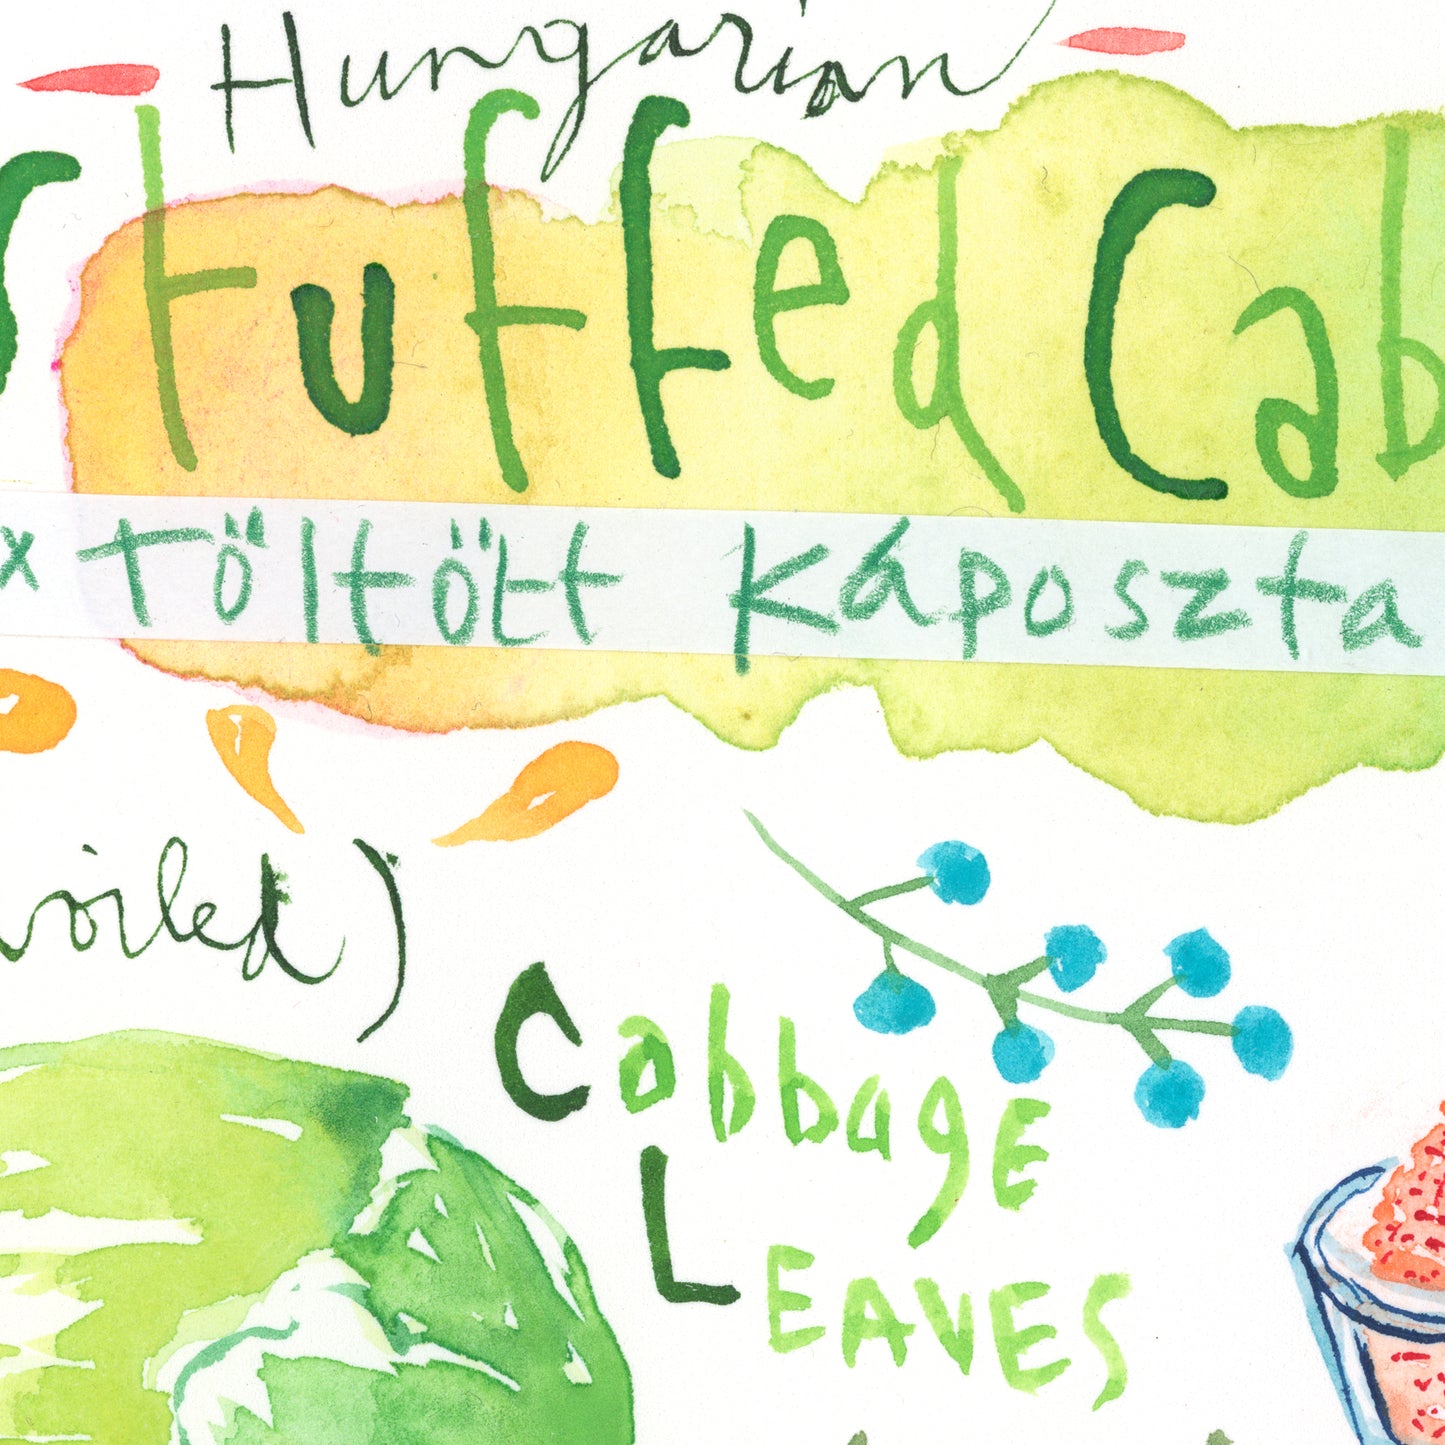 Hungarian Stuffed Cabbage Leaves recipe. Original watercolor painting